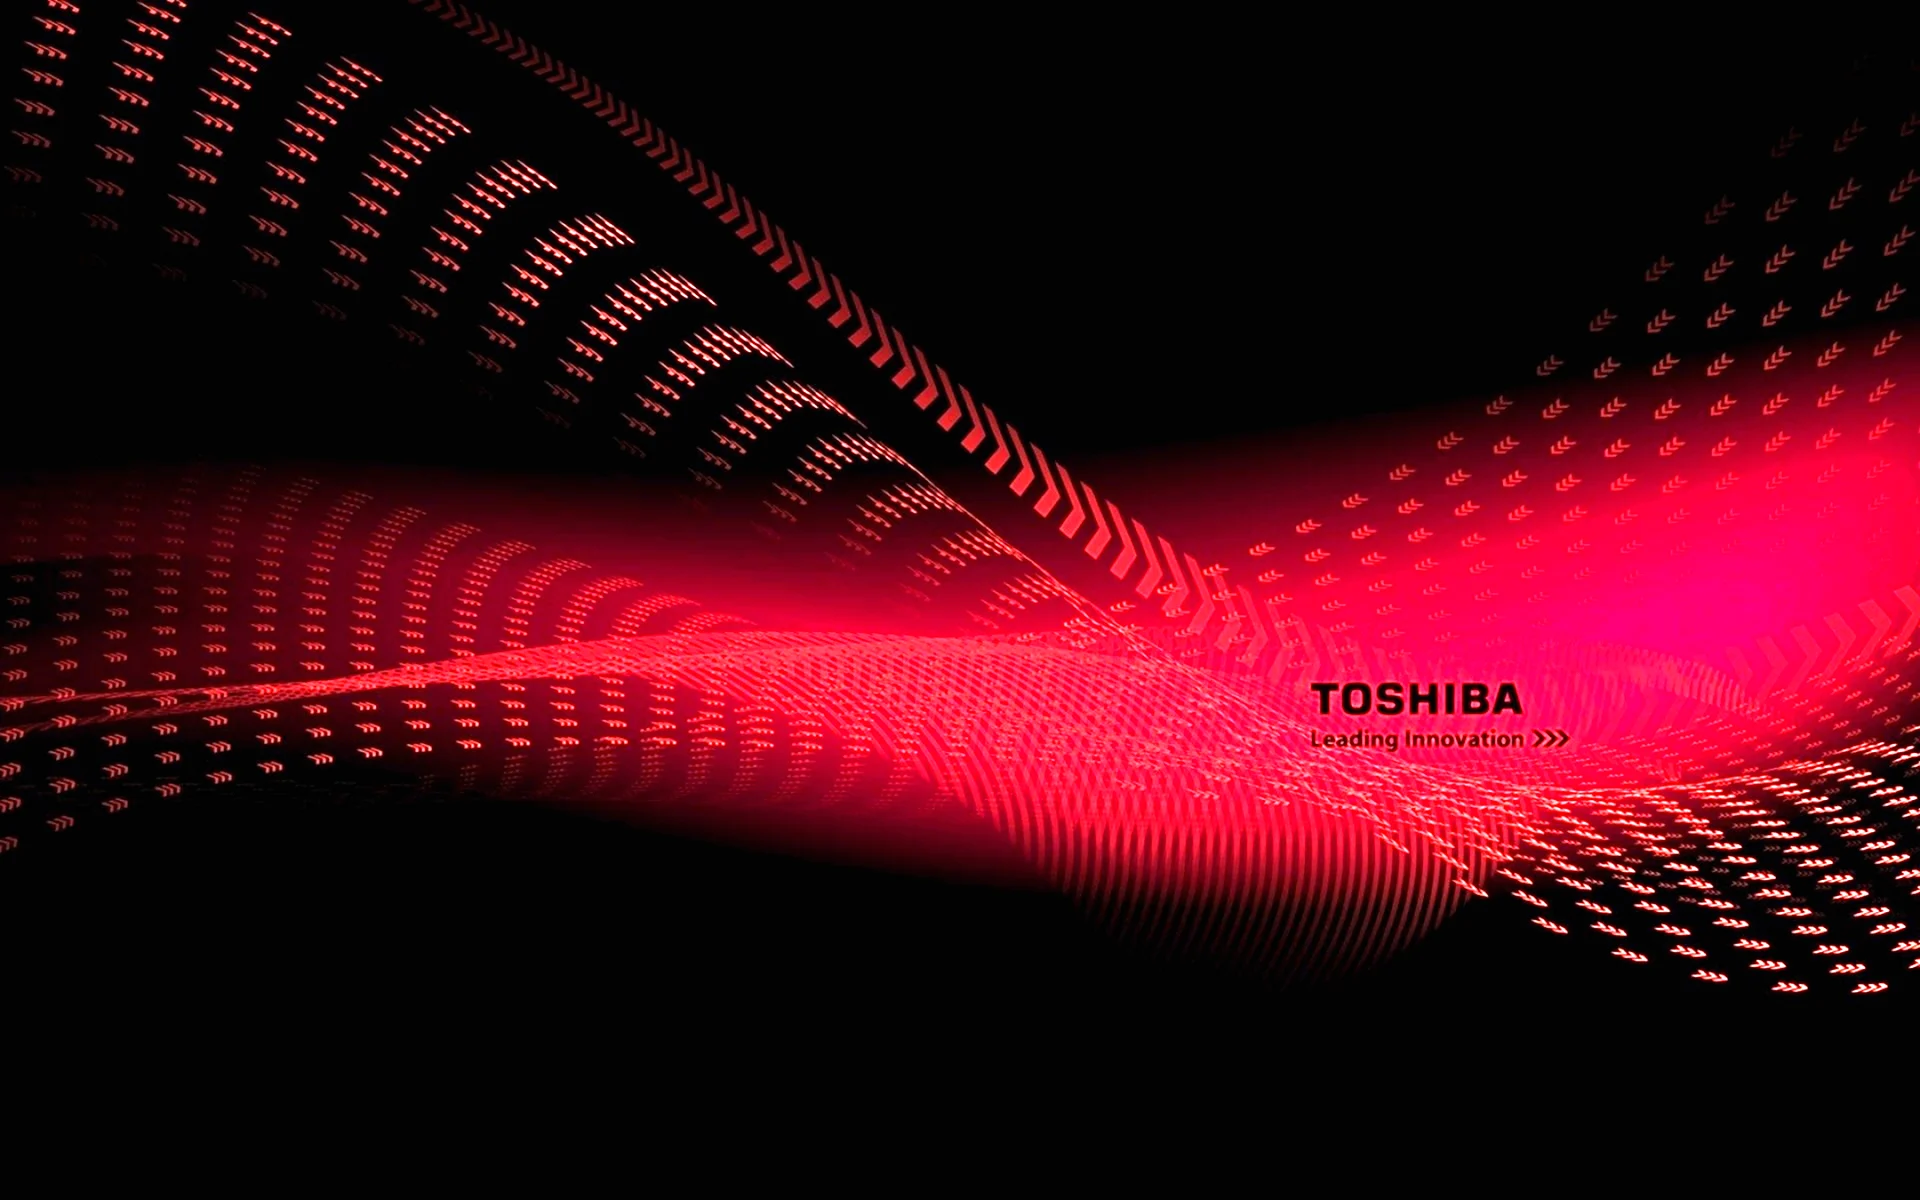 Toshiba leading Innovation